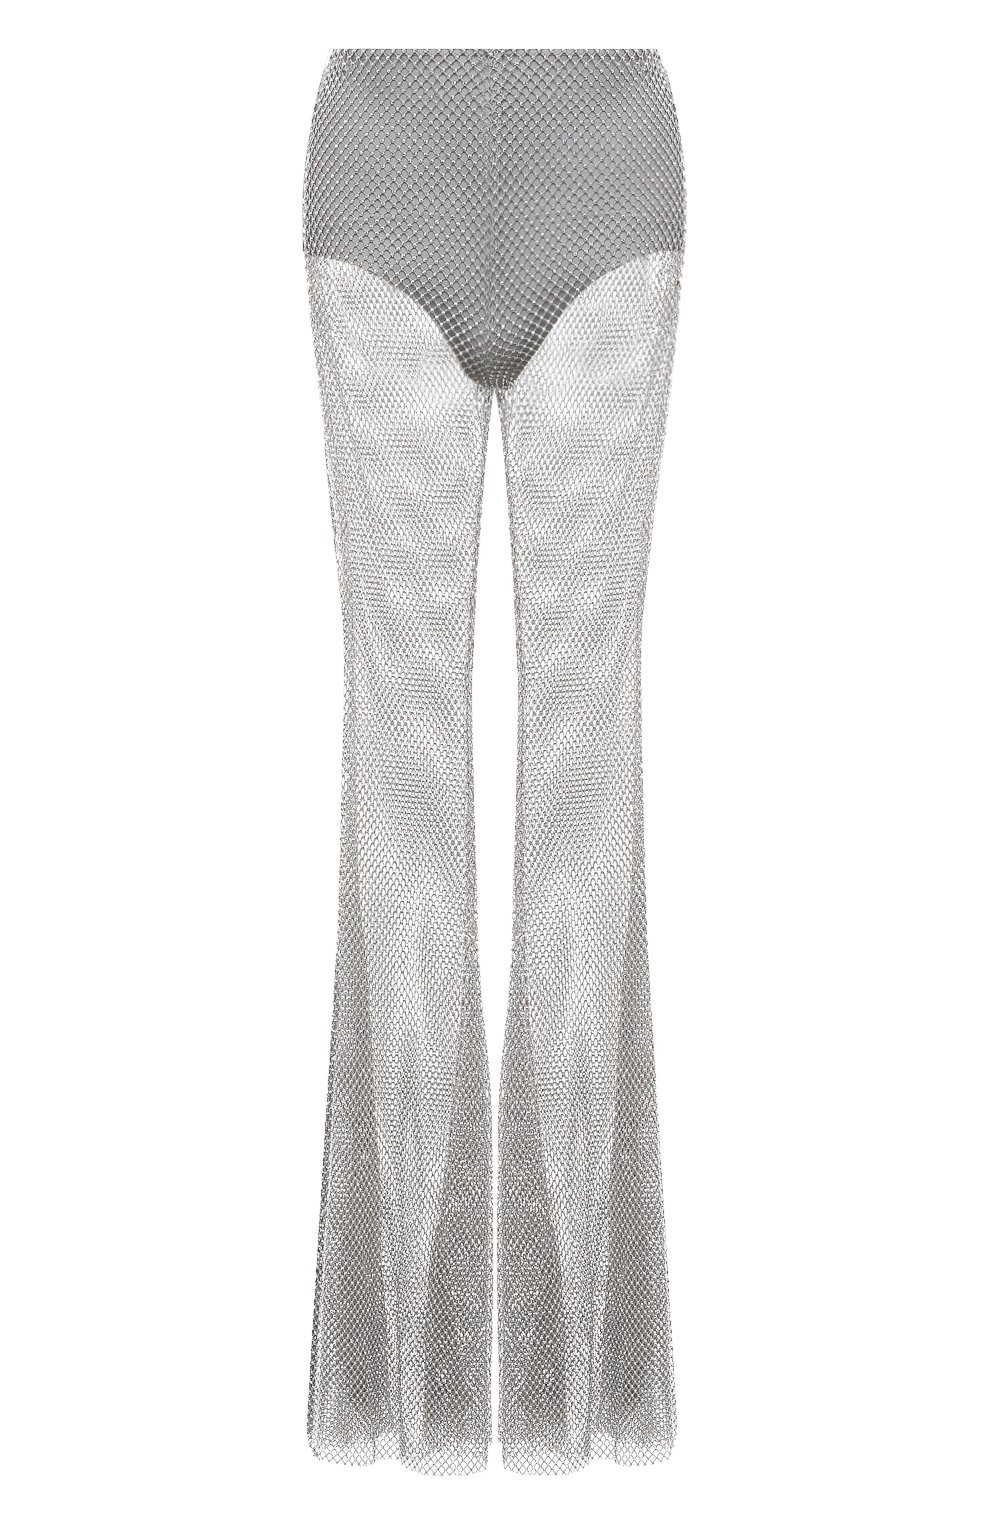 Женские брюки с отделкой пайетками GIUSEPPE DI MORABITO серебряного цвета, арт. PF23072PA-231 | Фото 1 (Длина (брюки, д жинсы): Удлиненные; Стили: Гламурный; Женское Кросс-КТ: Брюки-одежда; Материал внешний: Синтетический материал; Материал сплава: Проставлено; Силуэт Ж (брюки и джинсы): Расклешенные; Материал подклада: Синтетический материал; Драгоценные камни: Проставлено)